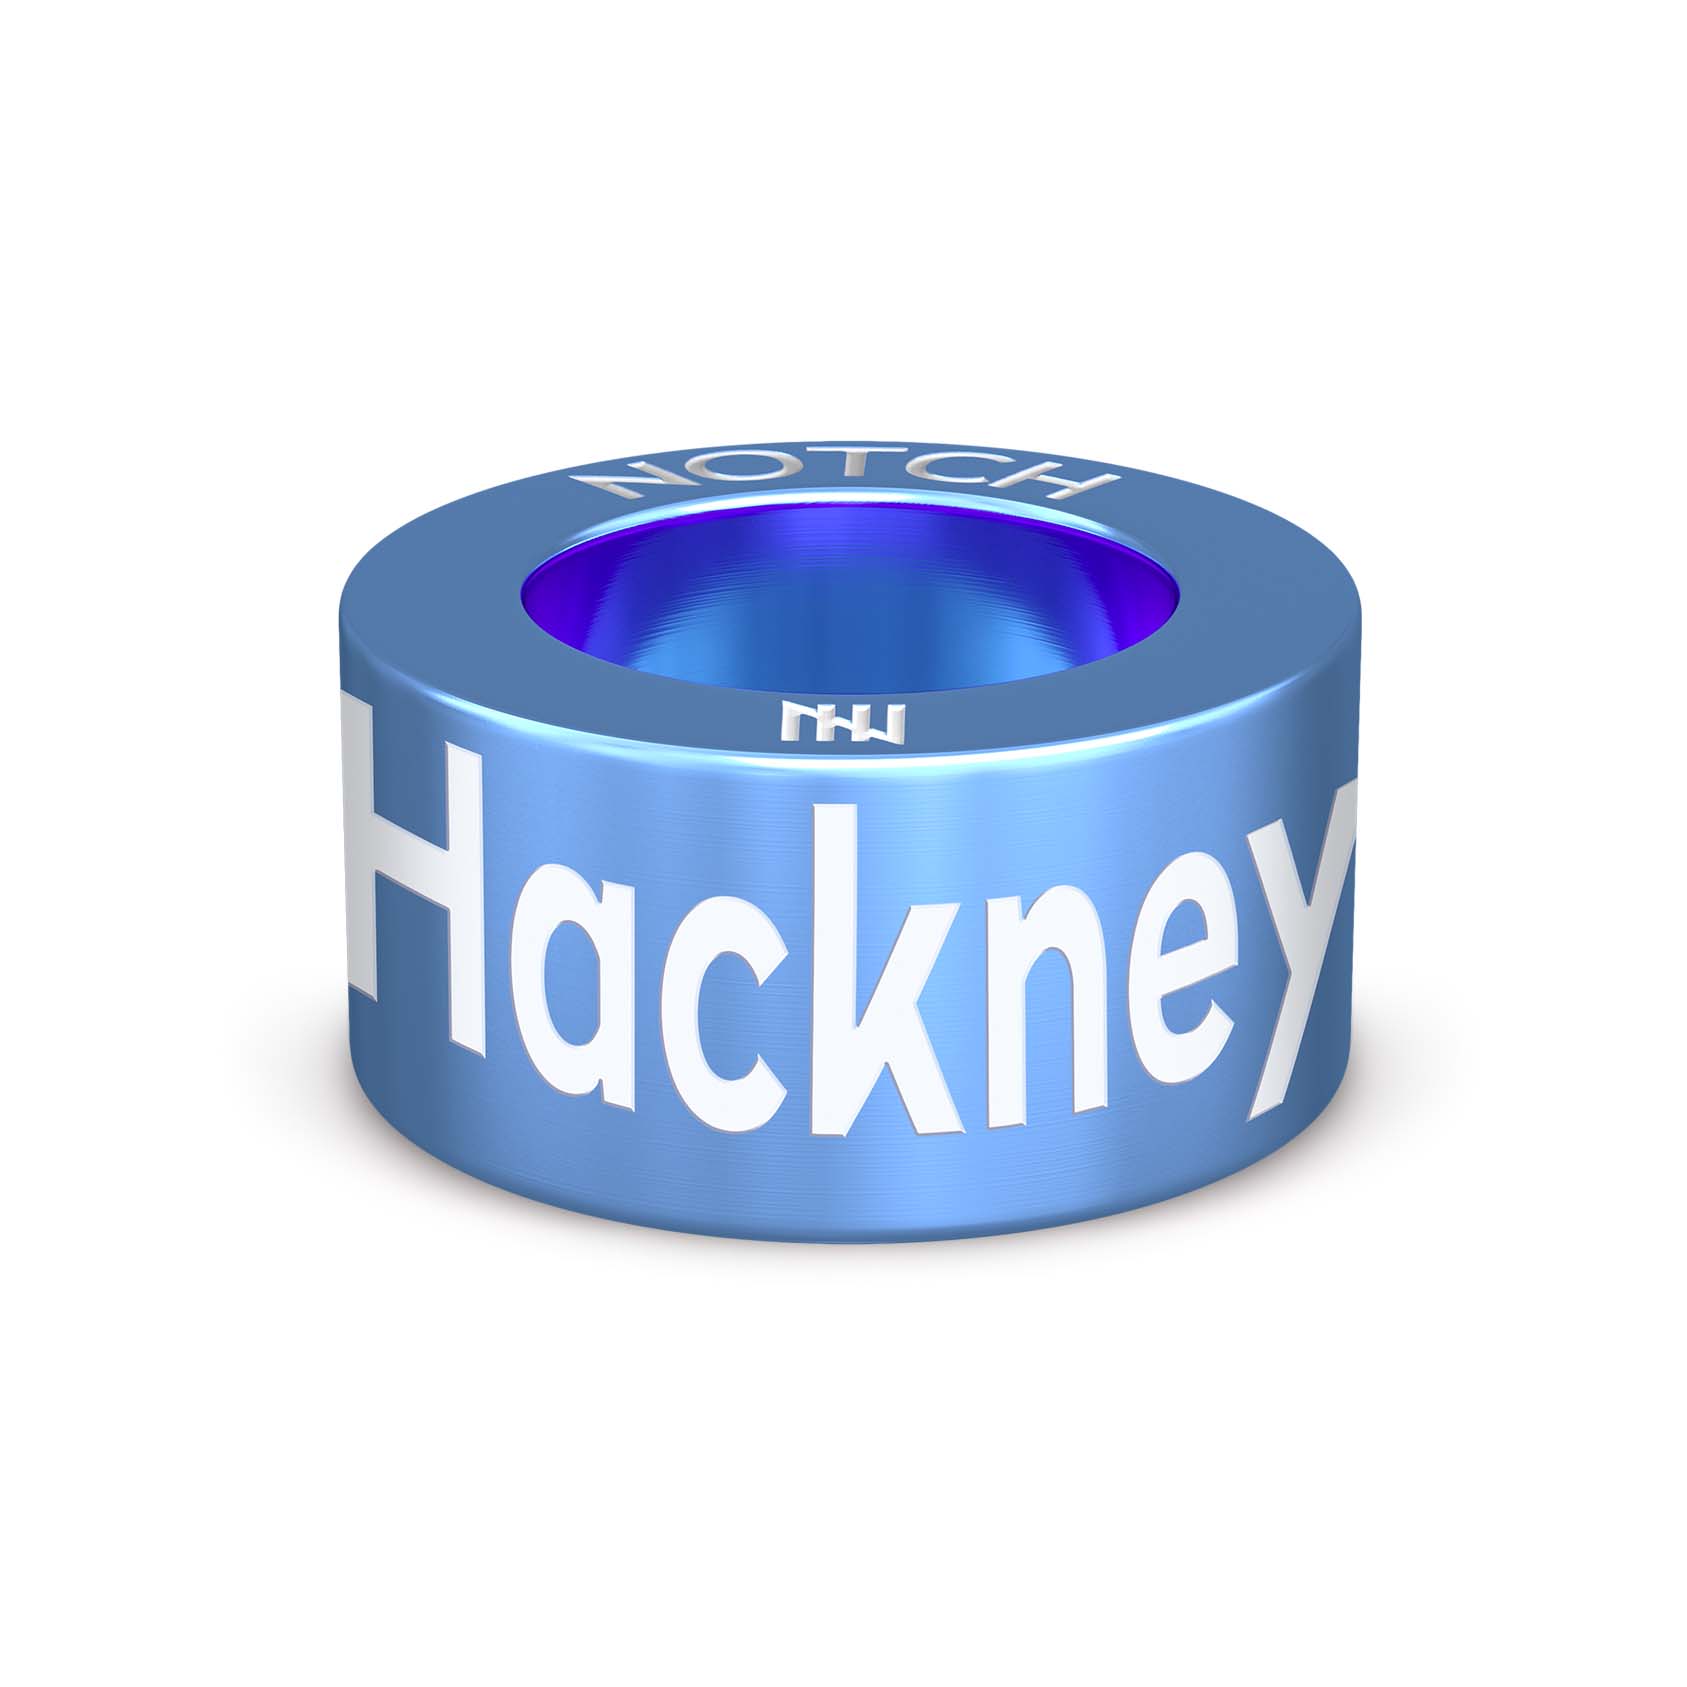 Hackney Half Marathon X NHSCT NOTCH Charm